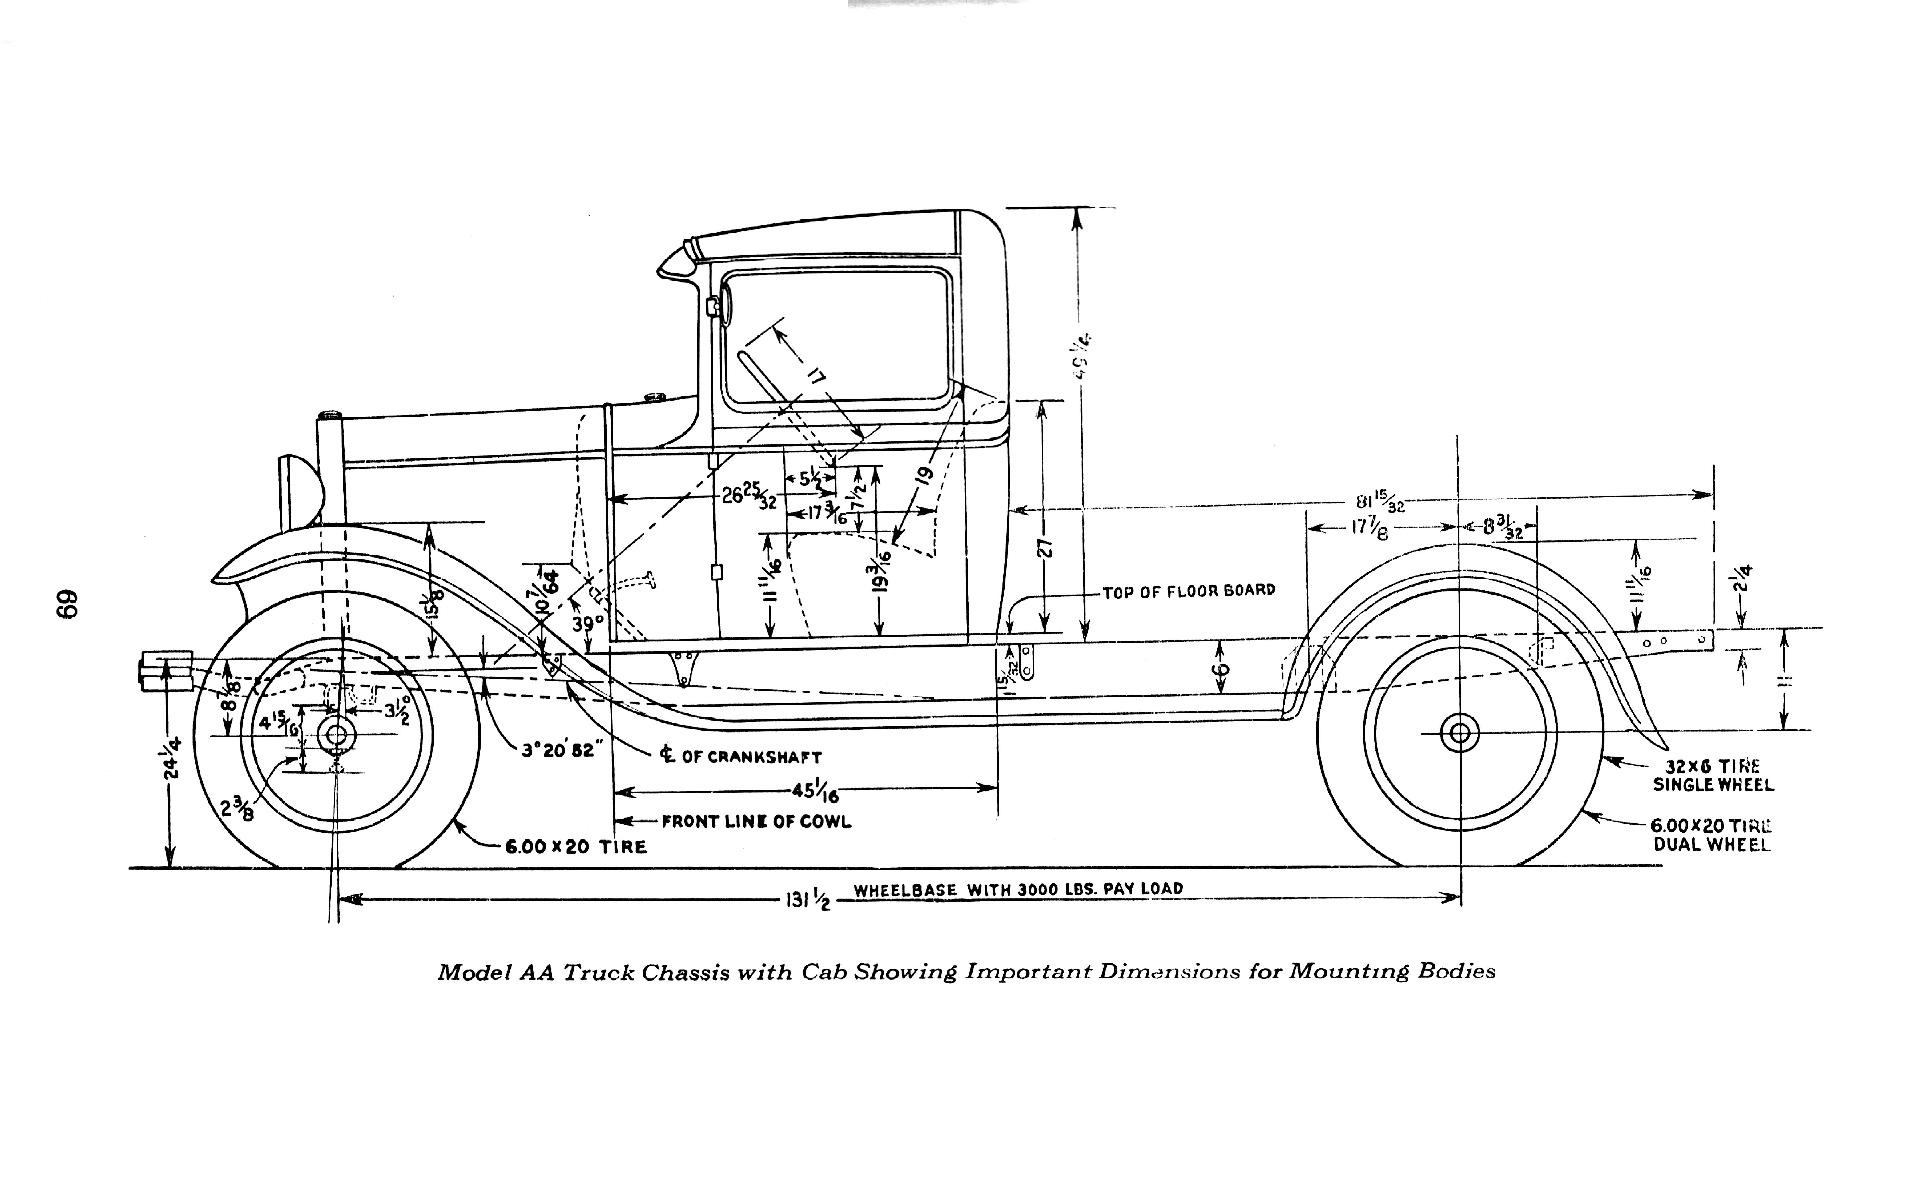 Measurements of ford models